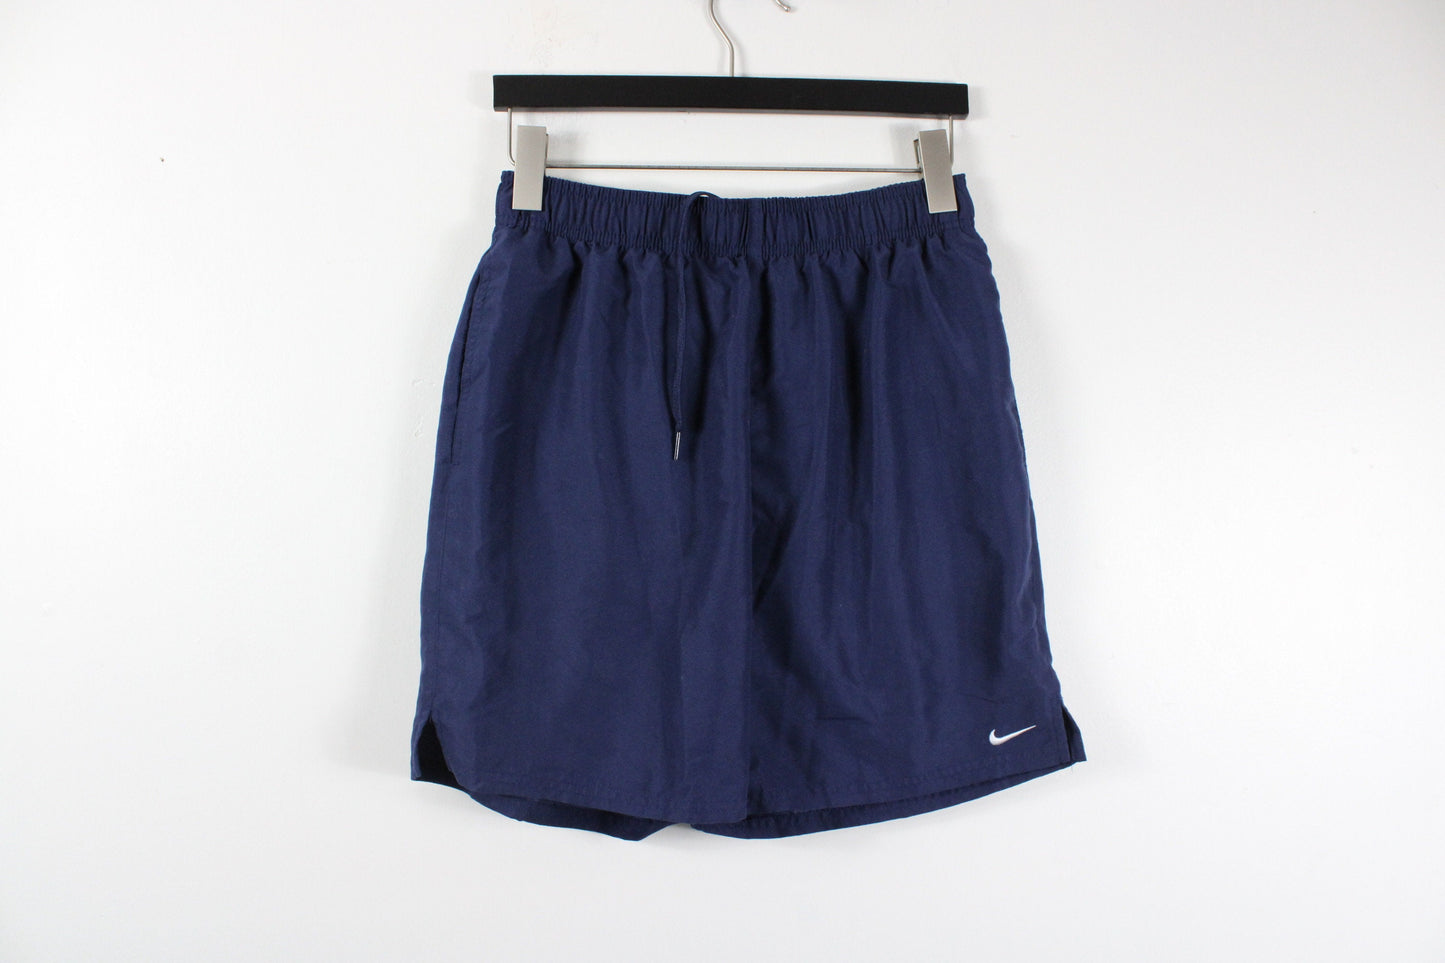 Nike Shorts / Vintage Track Windbreaker Style Short / 90s Streetwear / Vintage Hip Hop Clothing